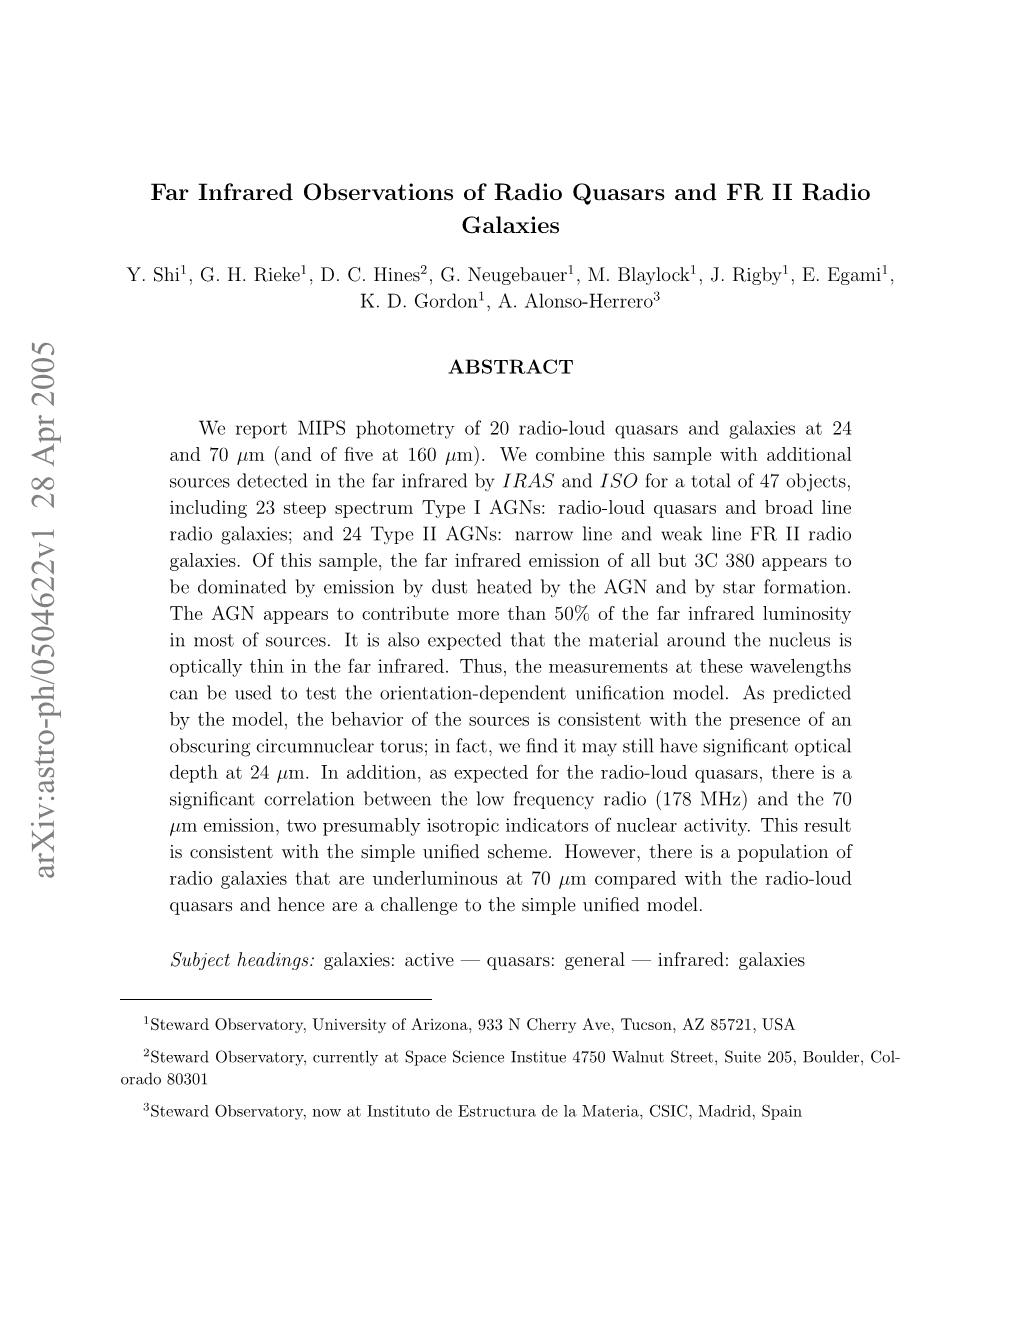 Far Infrared Observations of Radio Quasars and FR II Radio Galaxies